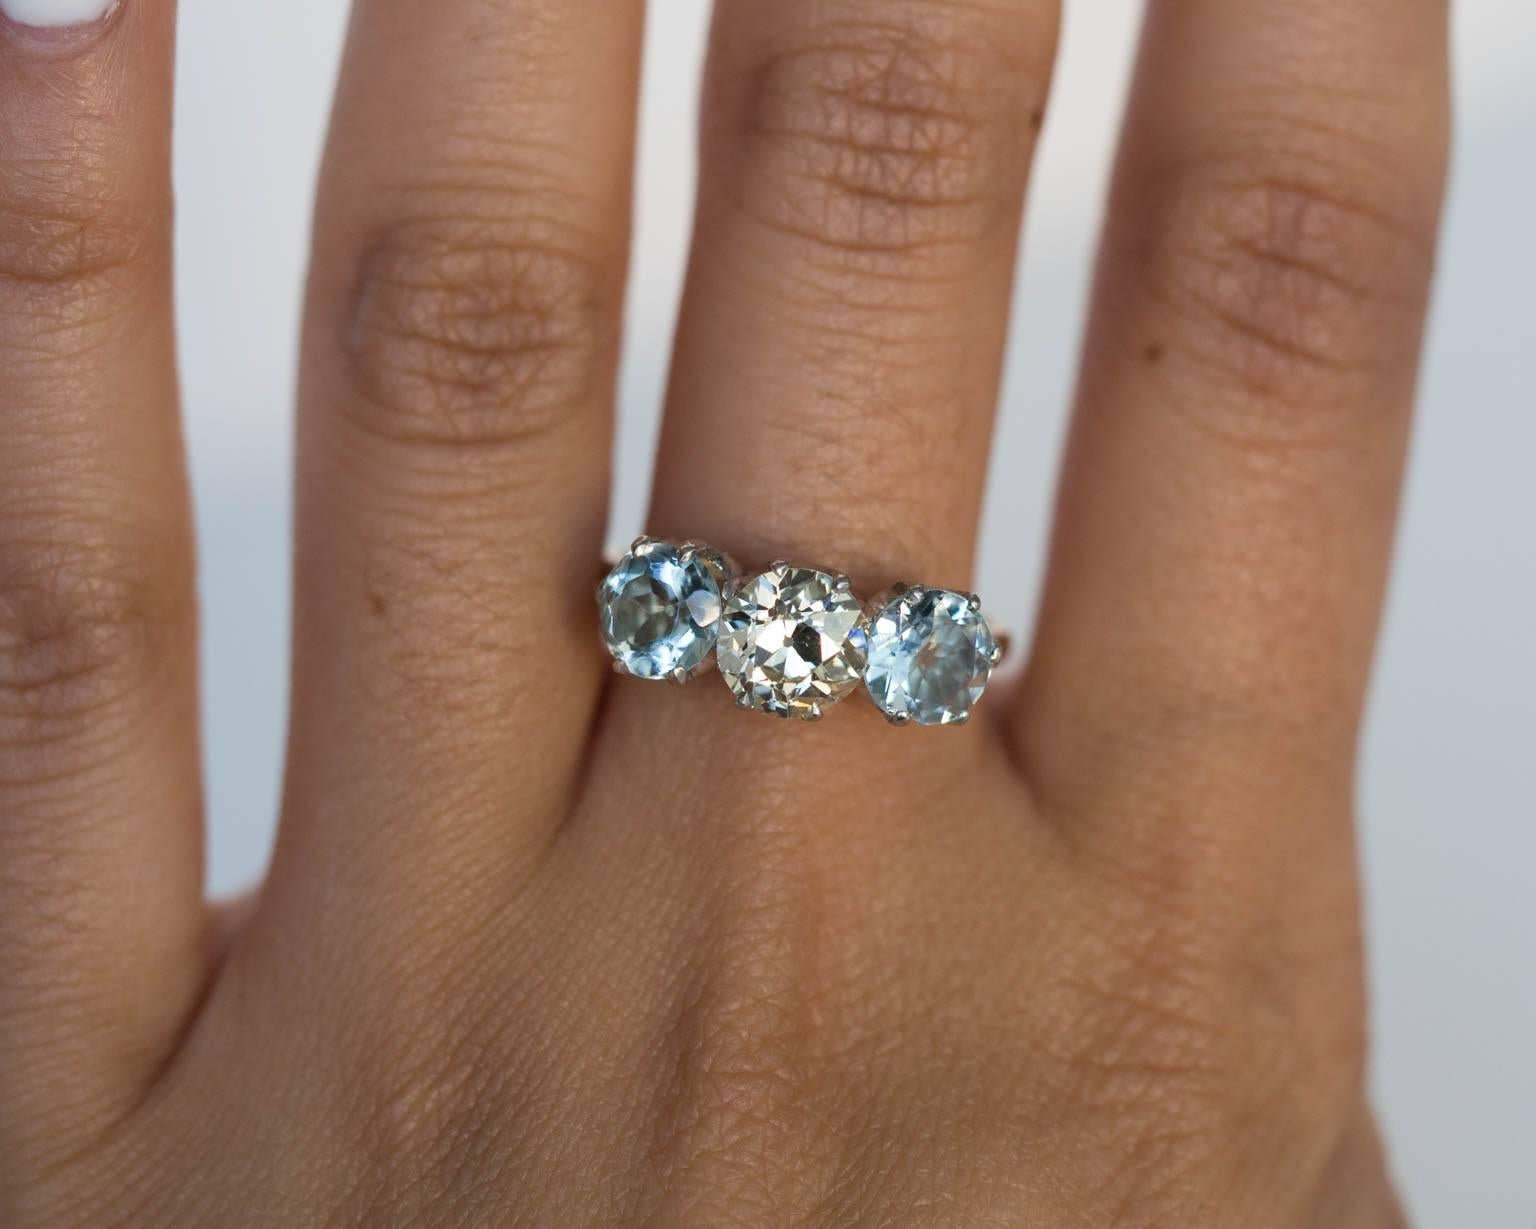 1910 Edwardian Gold Engagement Ring with 1.05 Carat Diamond and Aquamarines 2